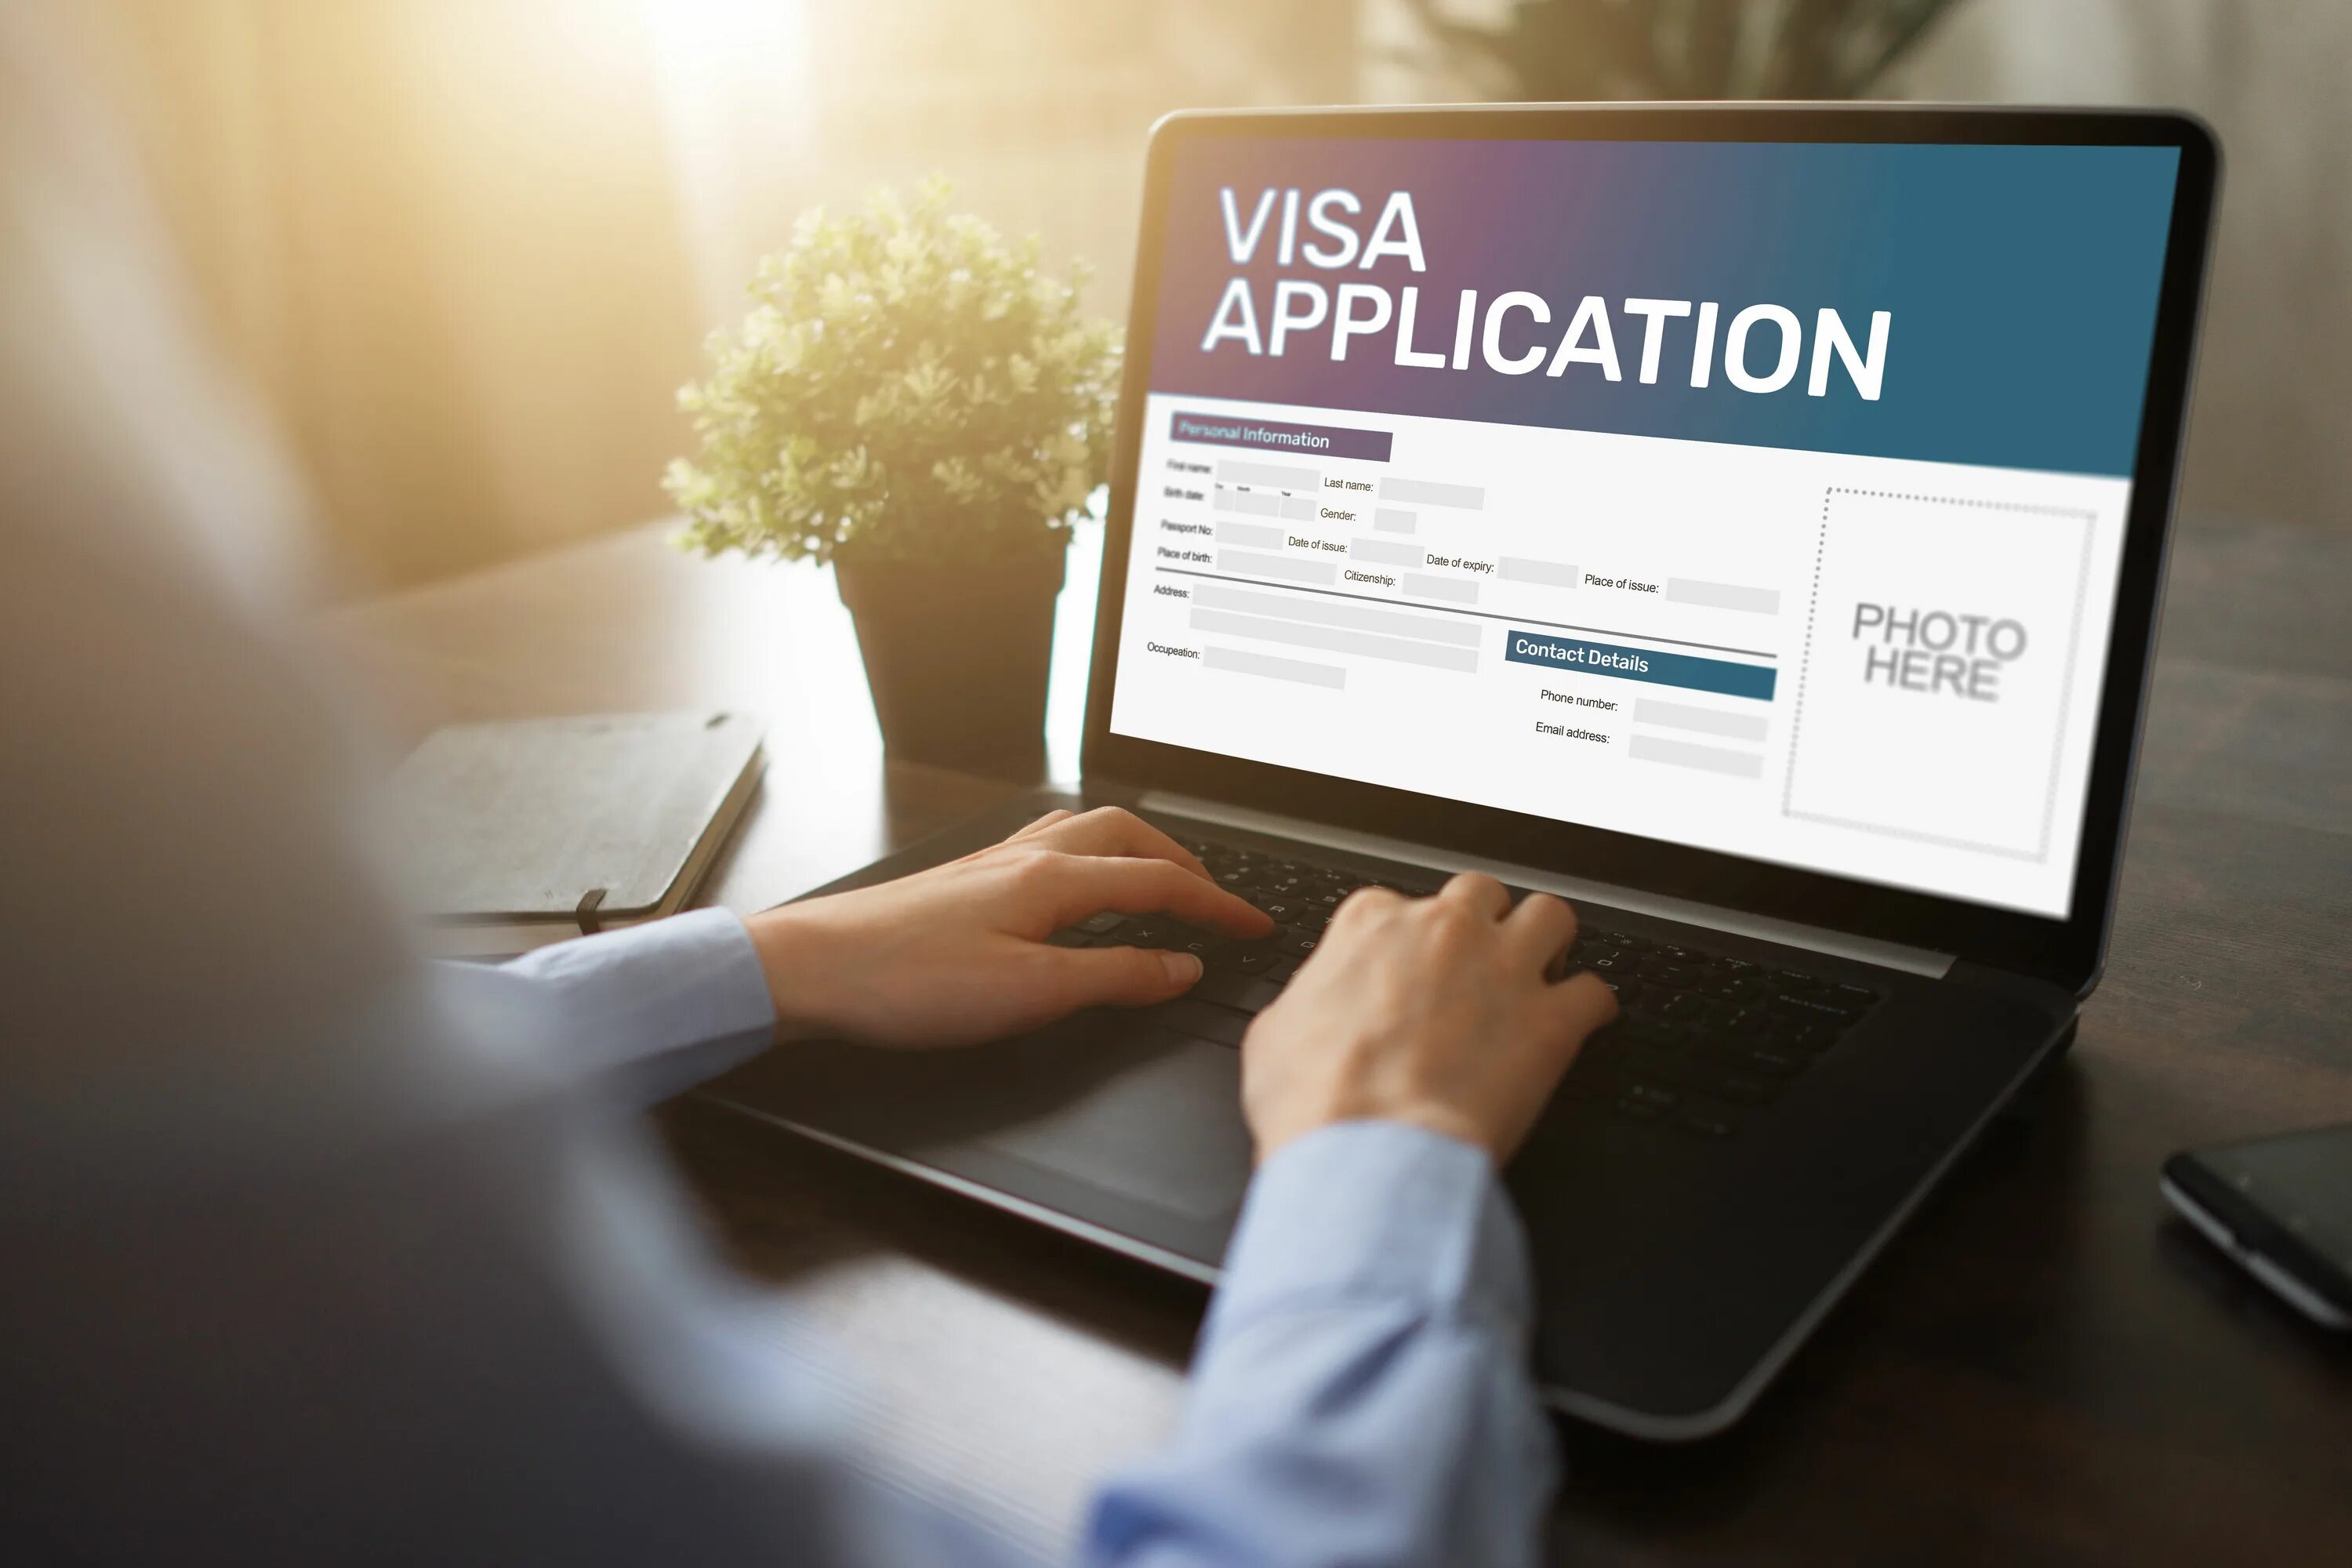 Visa application. Apply process